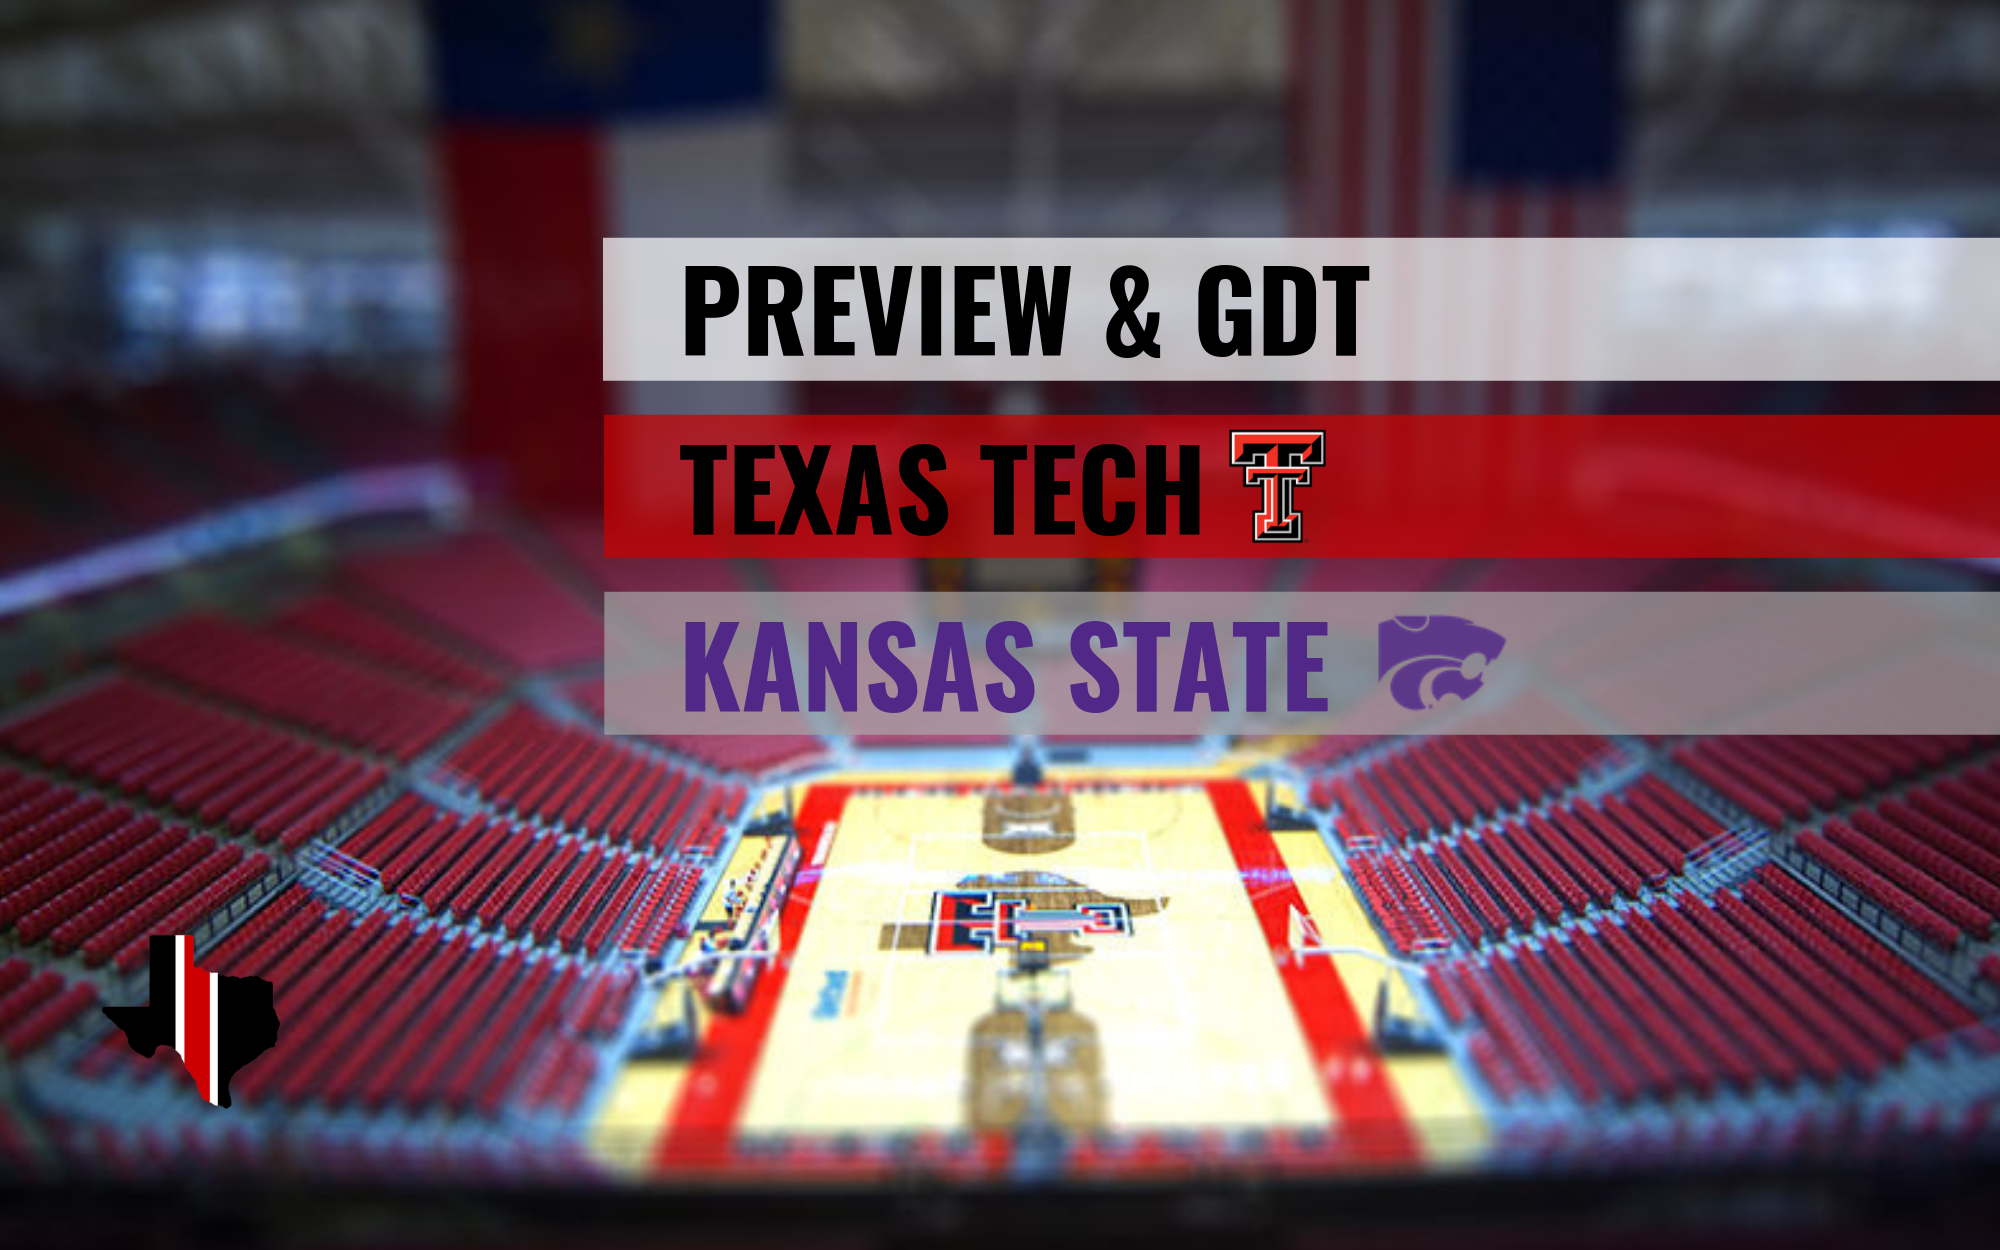 Preview & GDT: Texas Tech vs. Kansas State